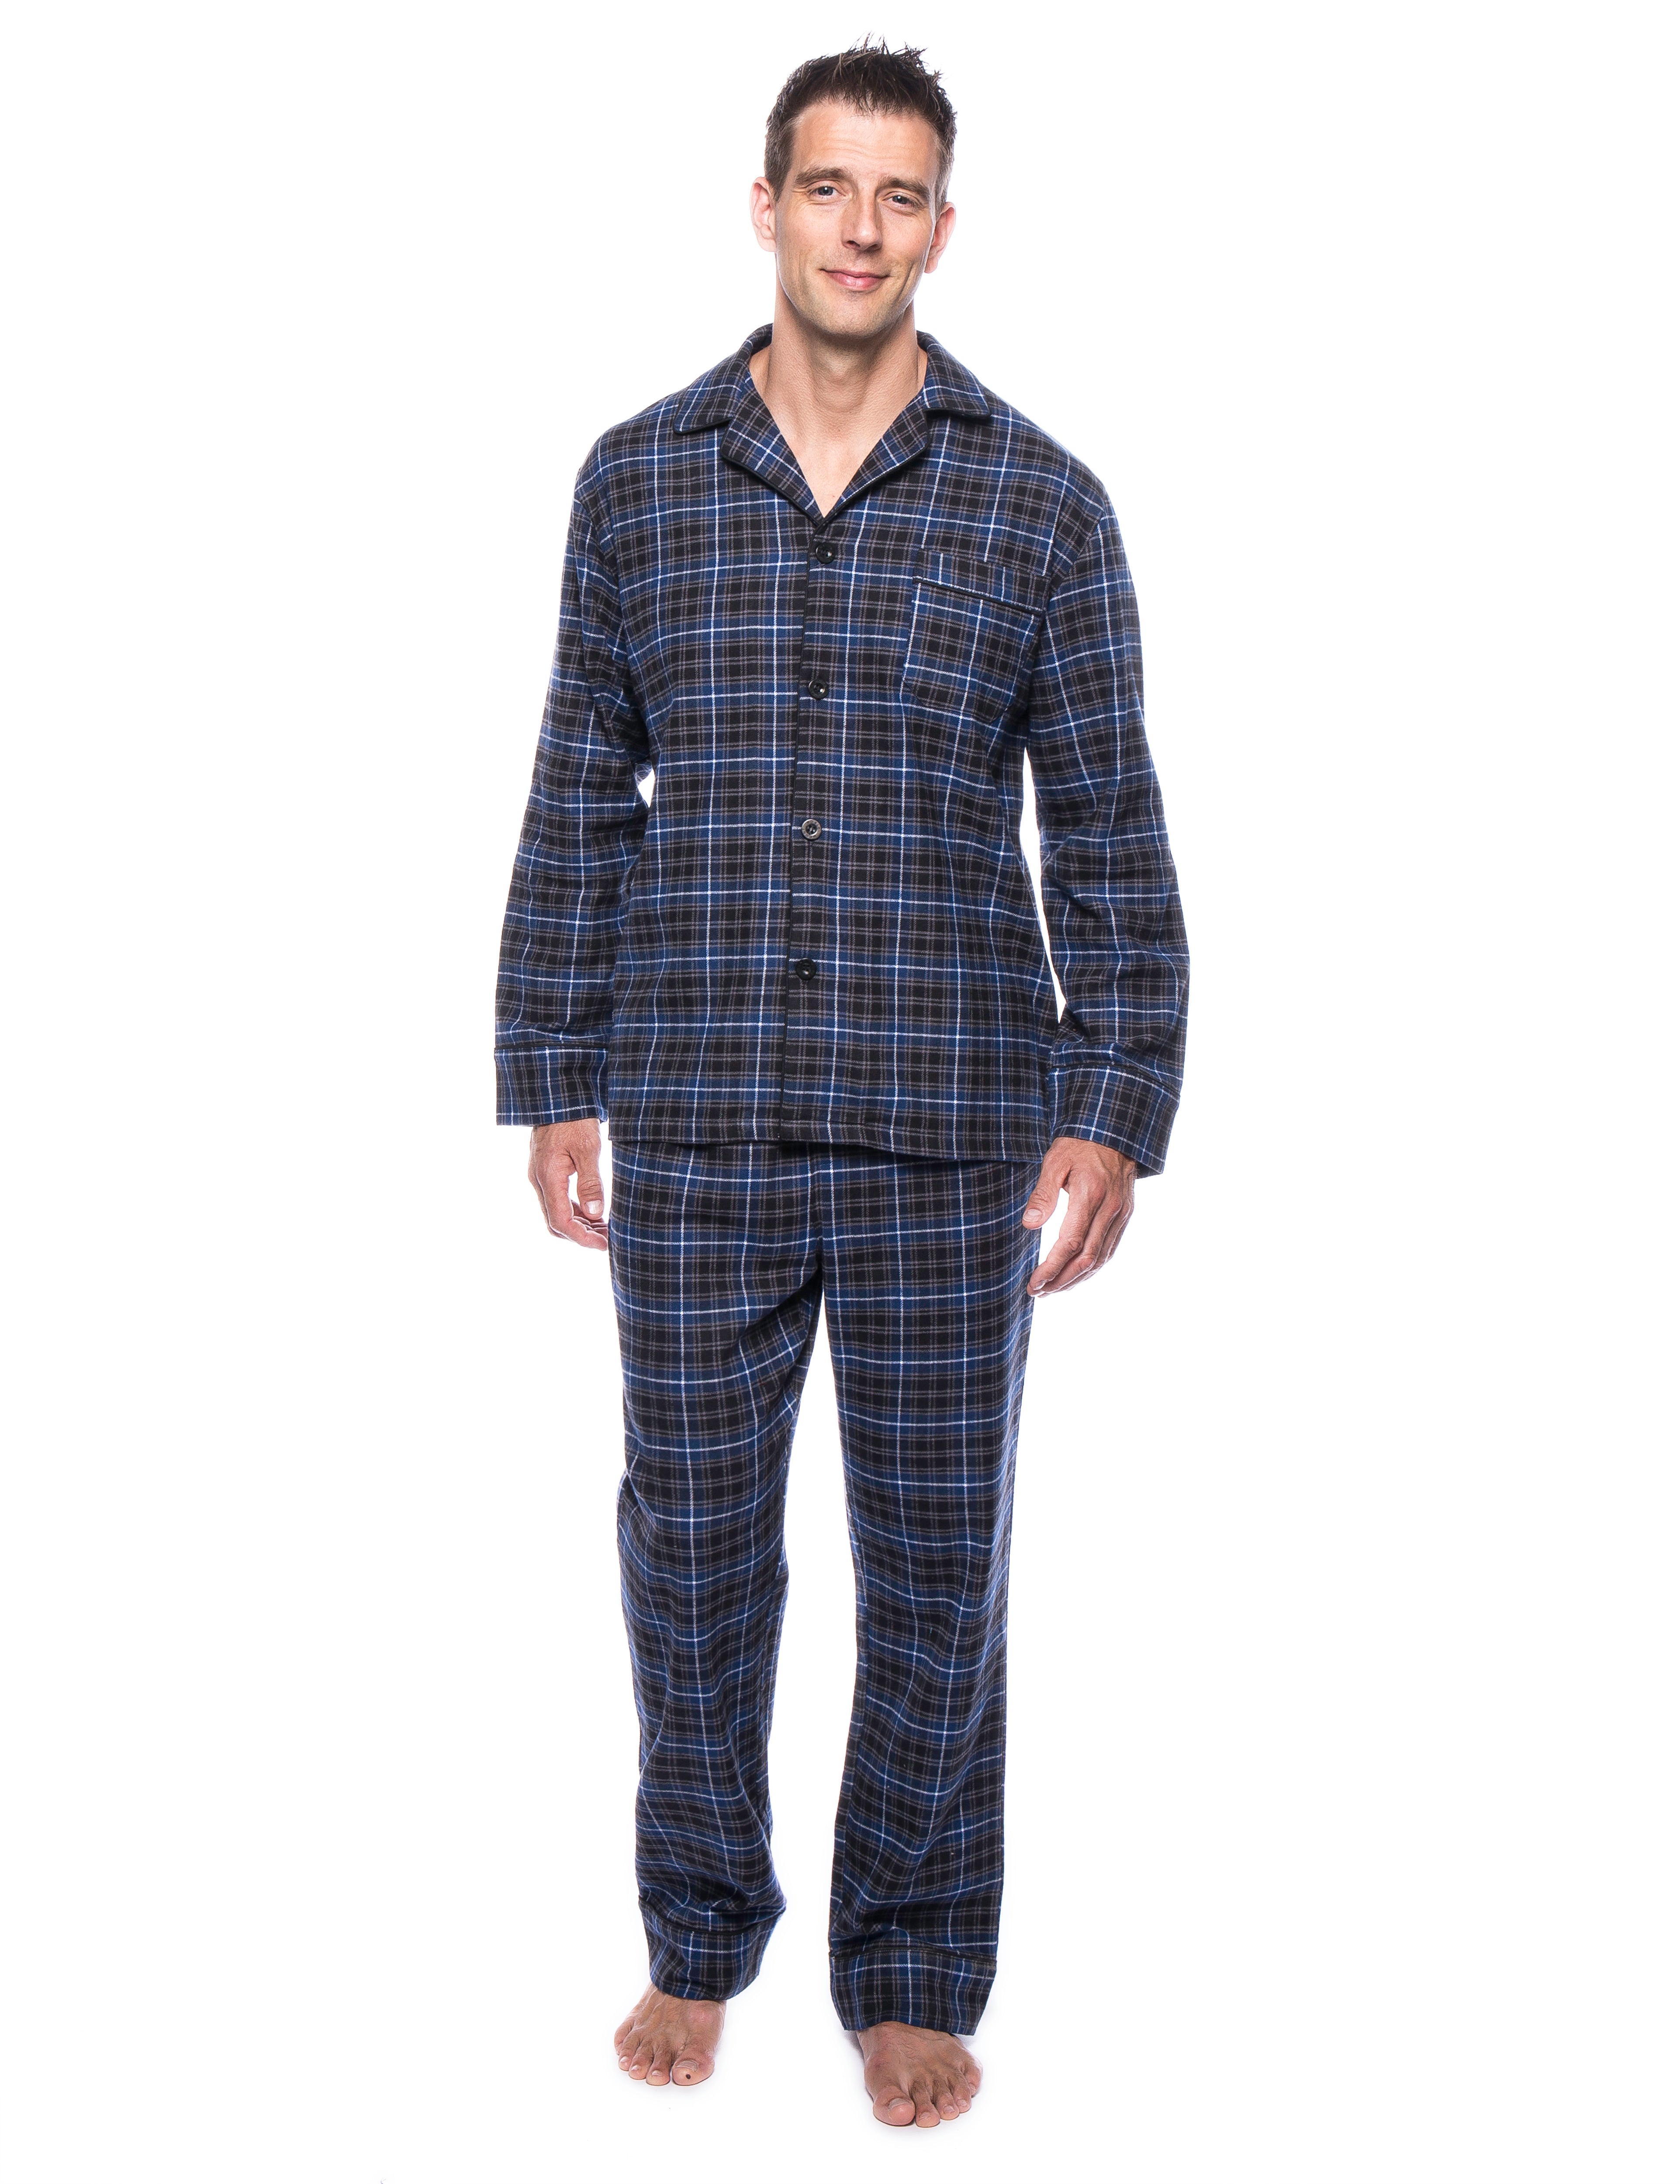 Mens Pajamas Set - 100% Cotton Flannel Pajamas for Men